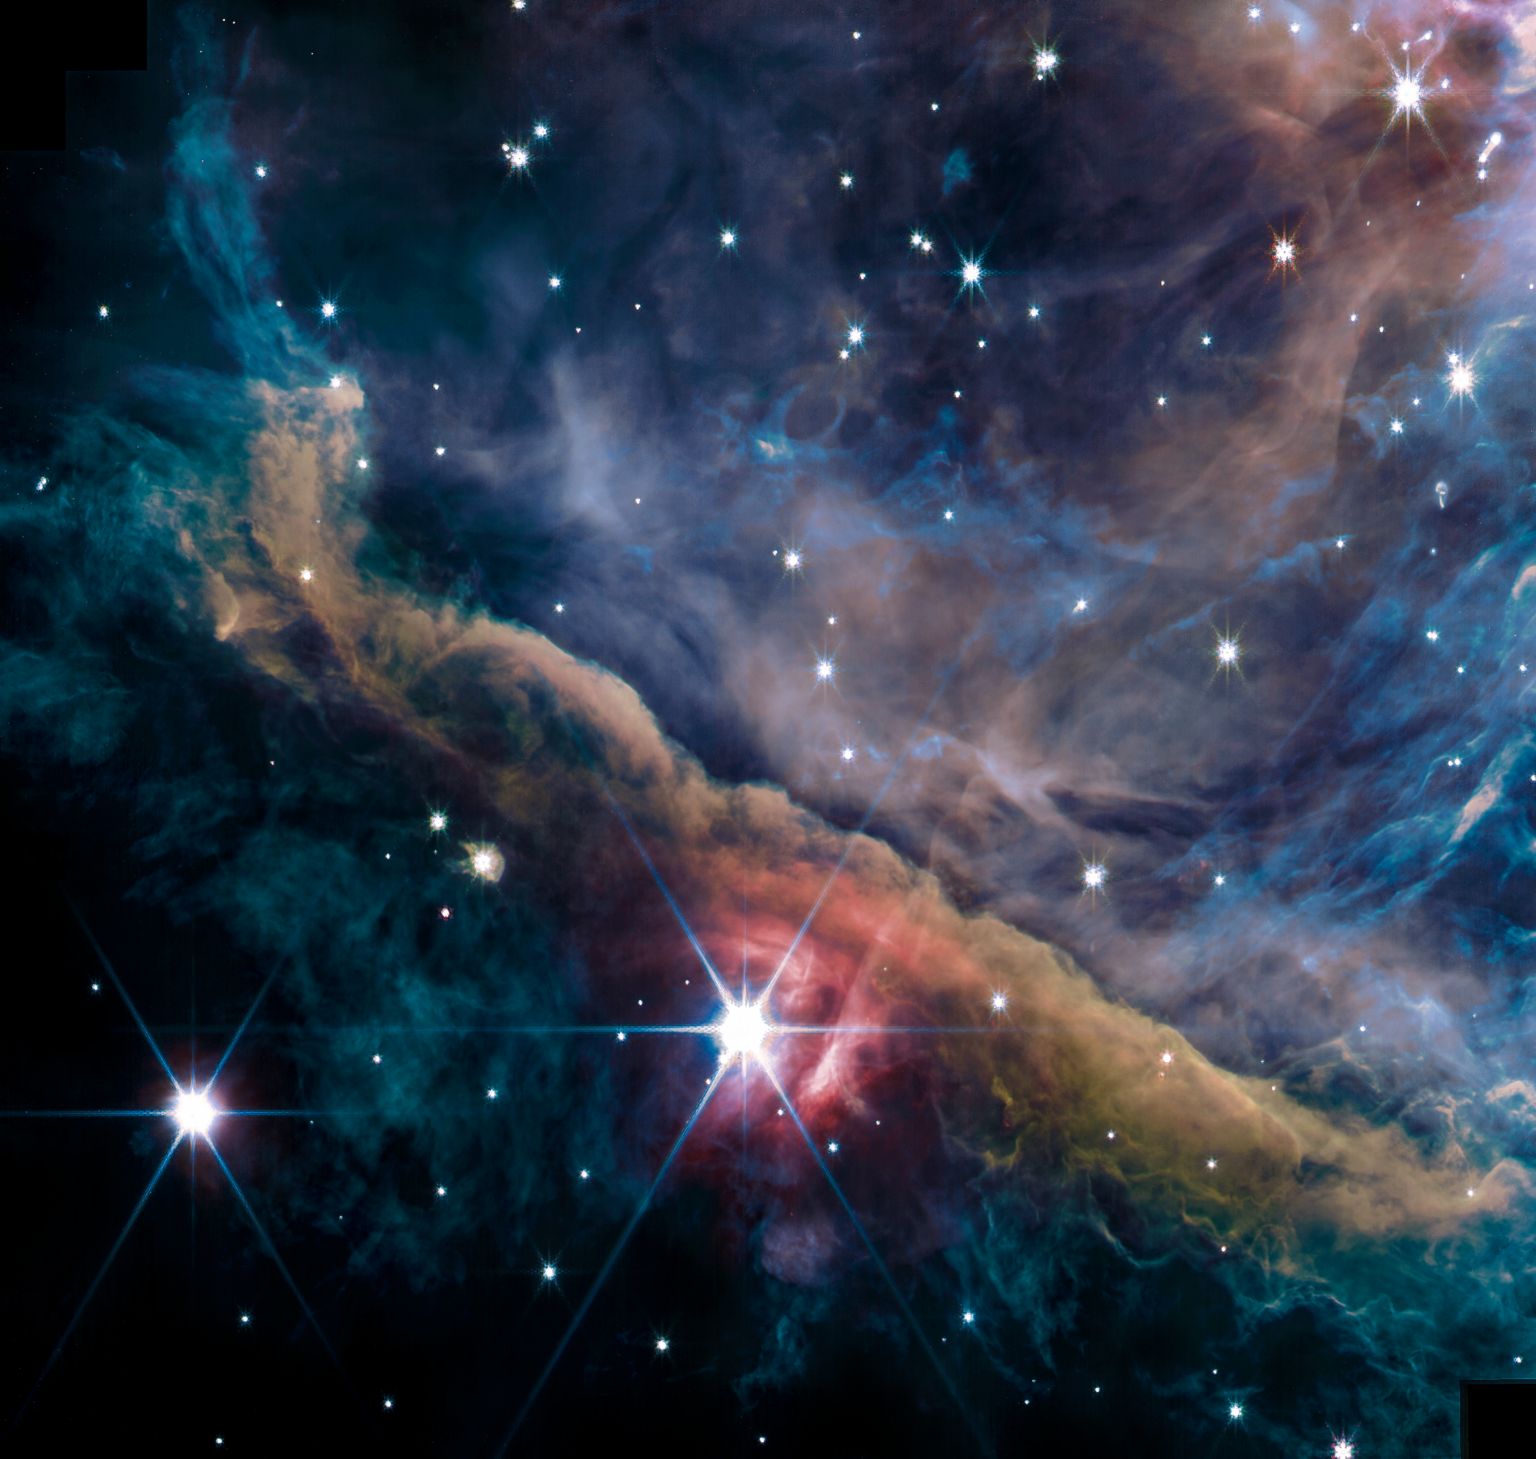 the full jwst image of the heart of the orion nebula